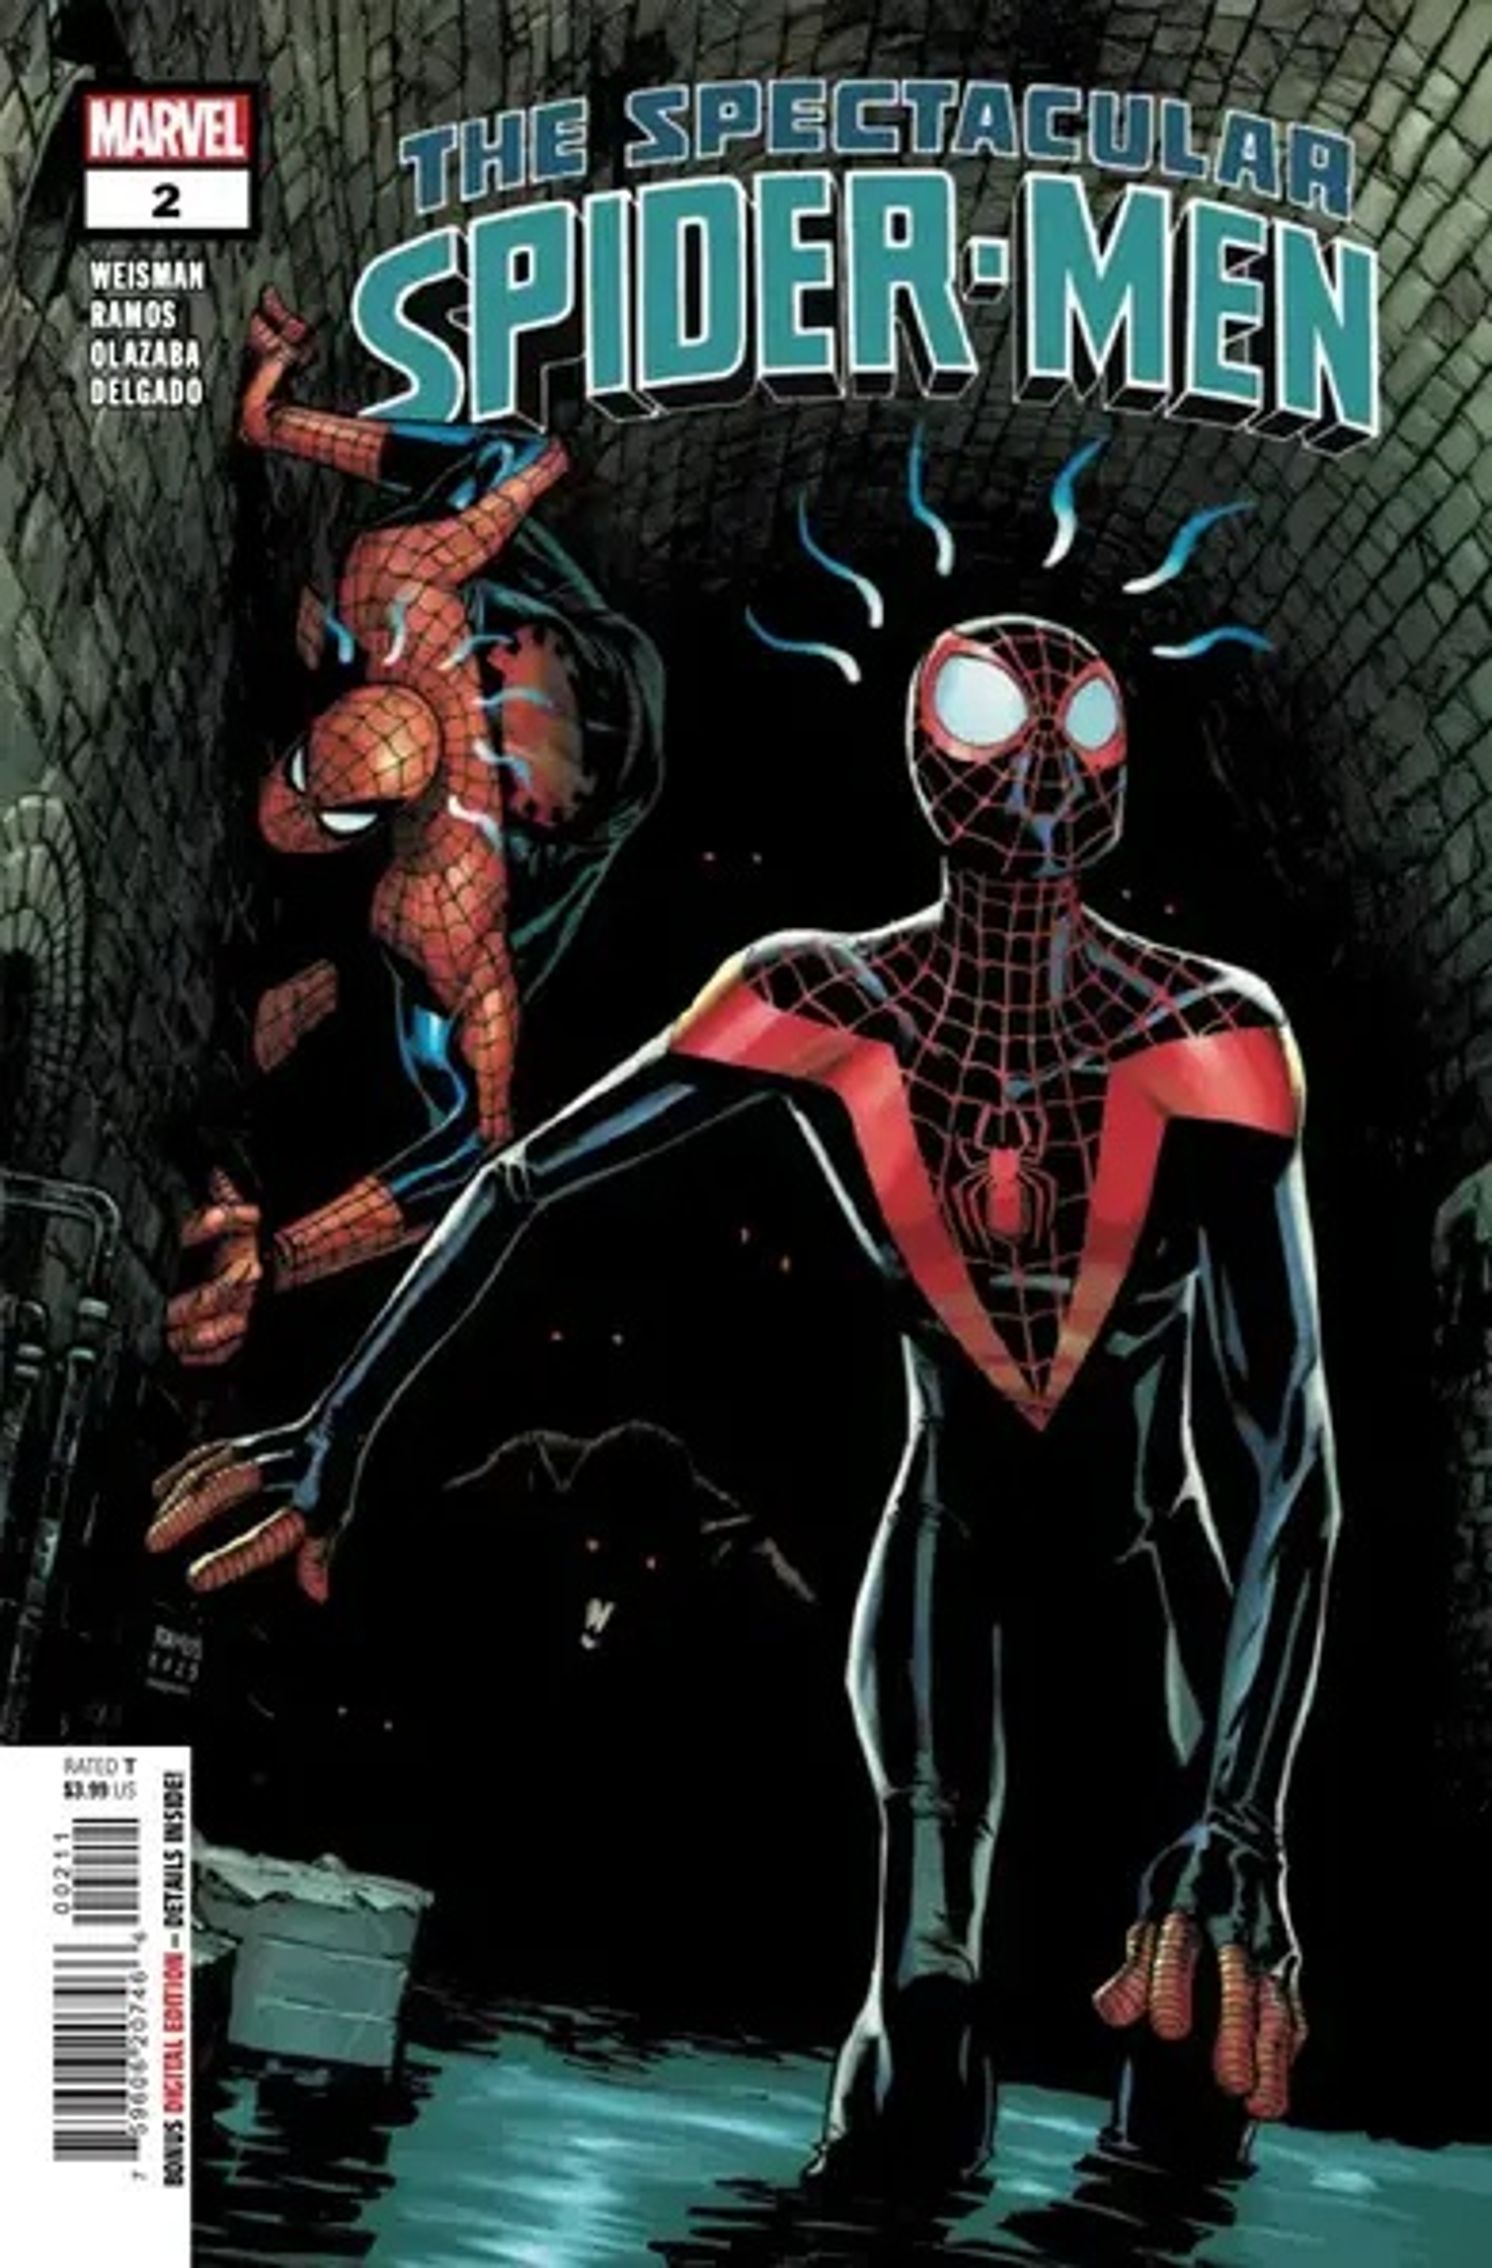 Capa de Spectacular Spider-Man #2, Miles e Peter nos esgotos, ambos os sentidos de aranha disparando.